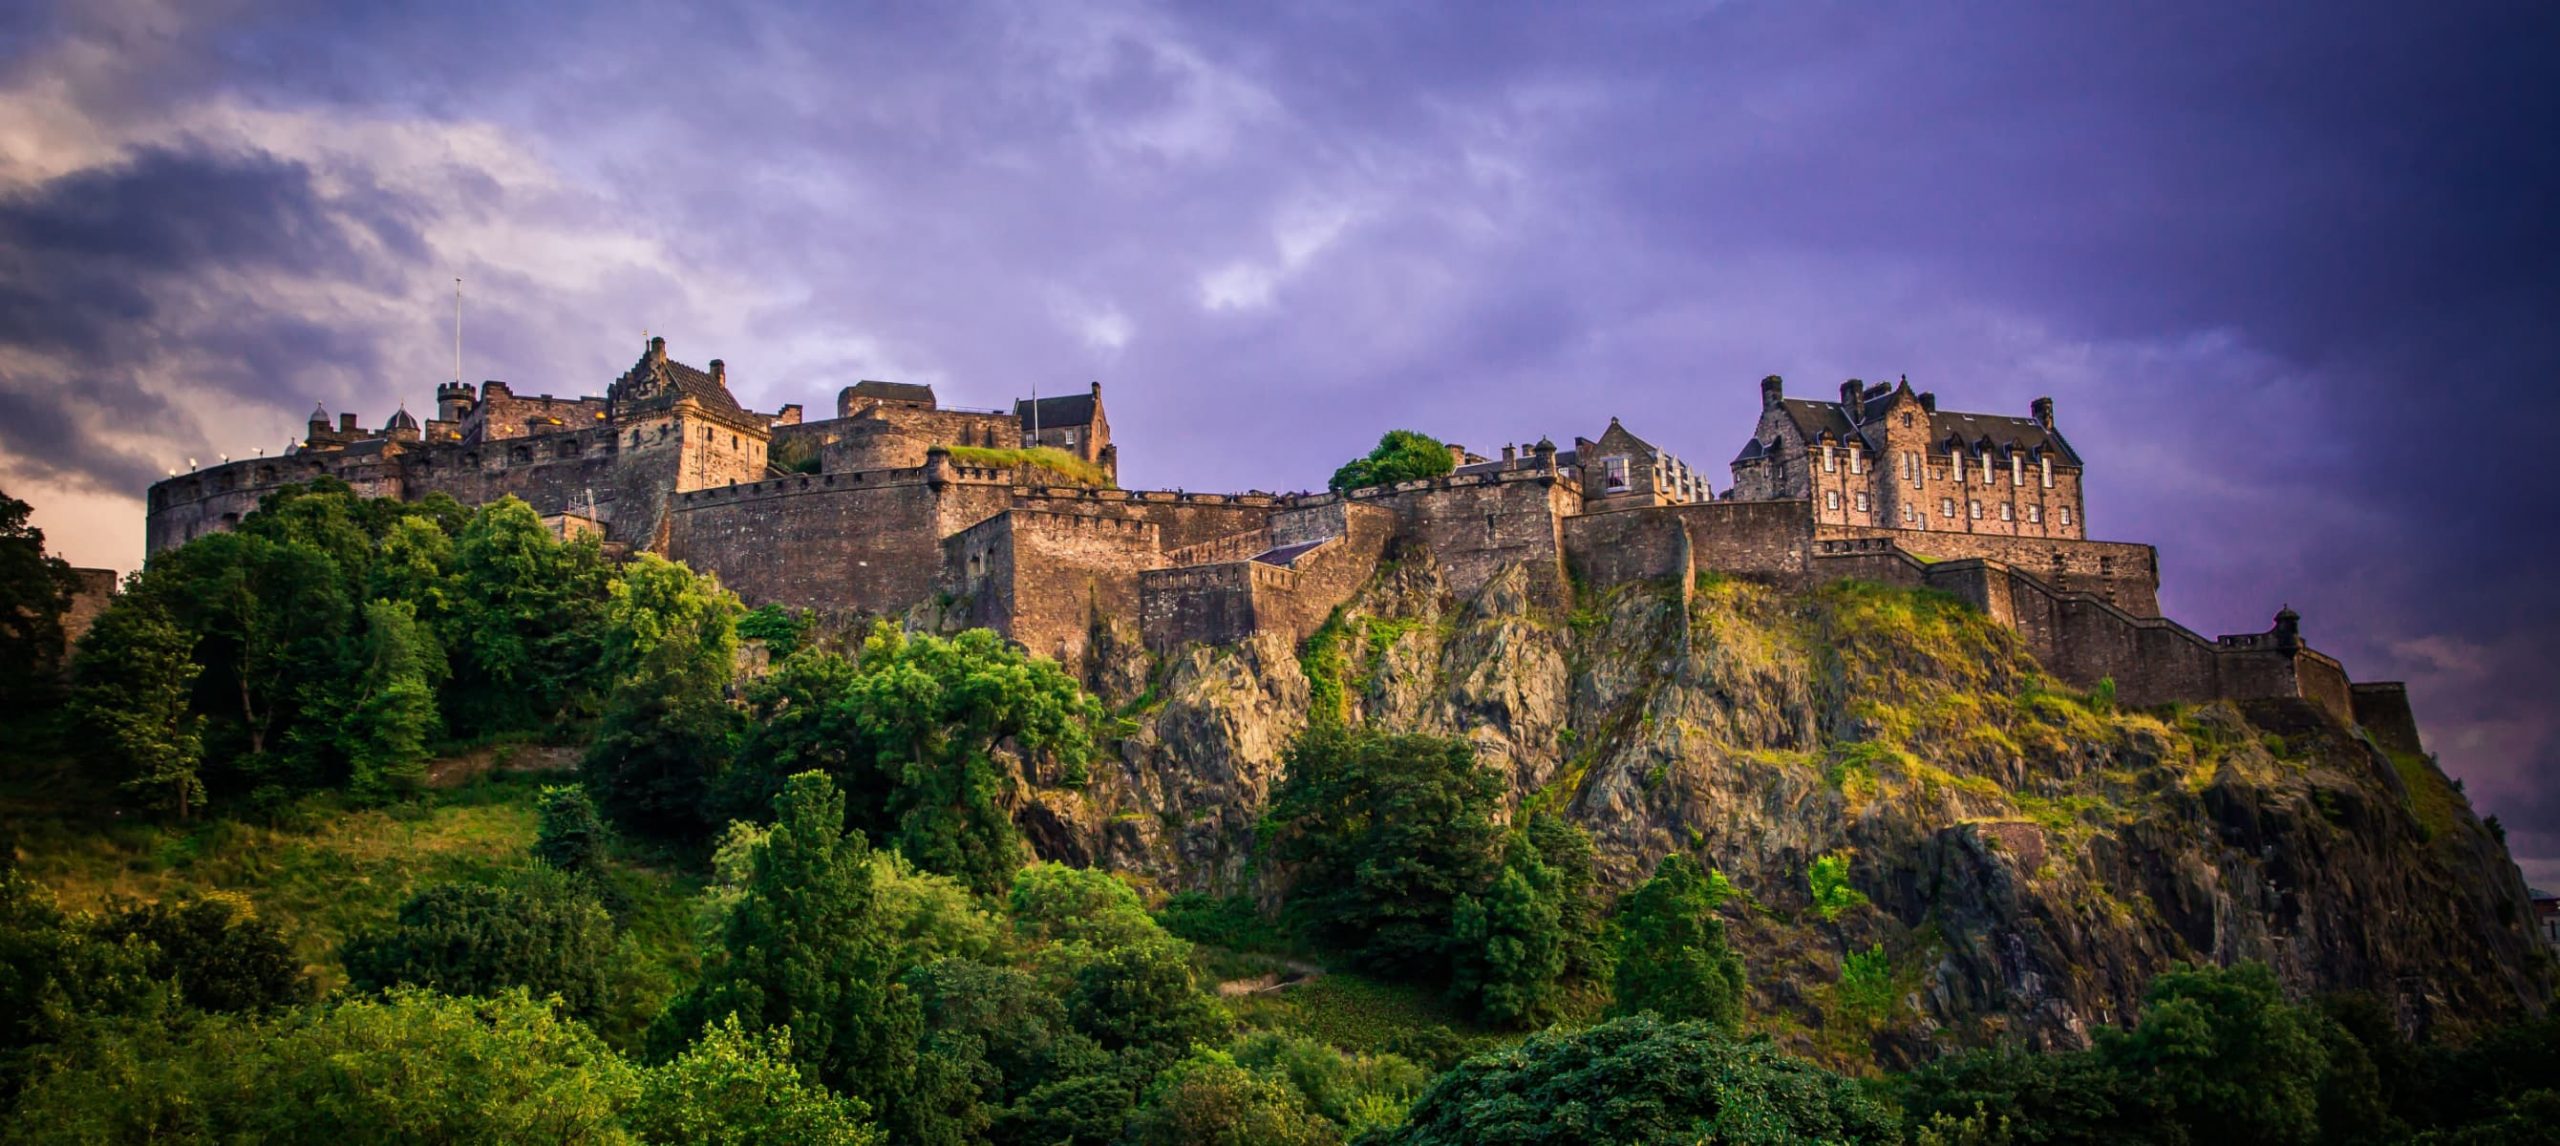 The Edinburgh Castle, in Ediburgh, at dawn.